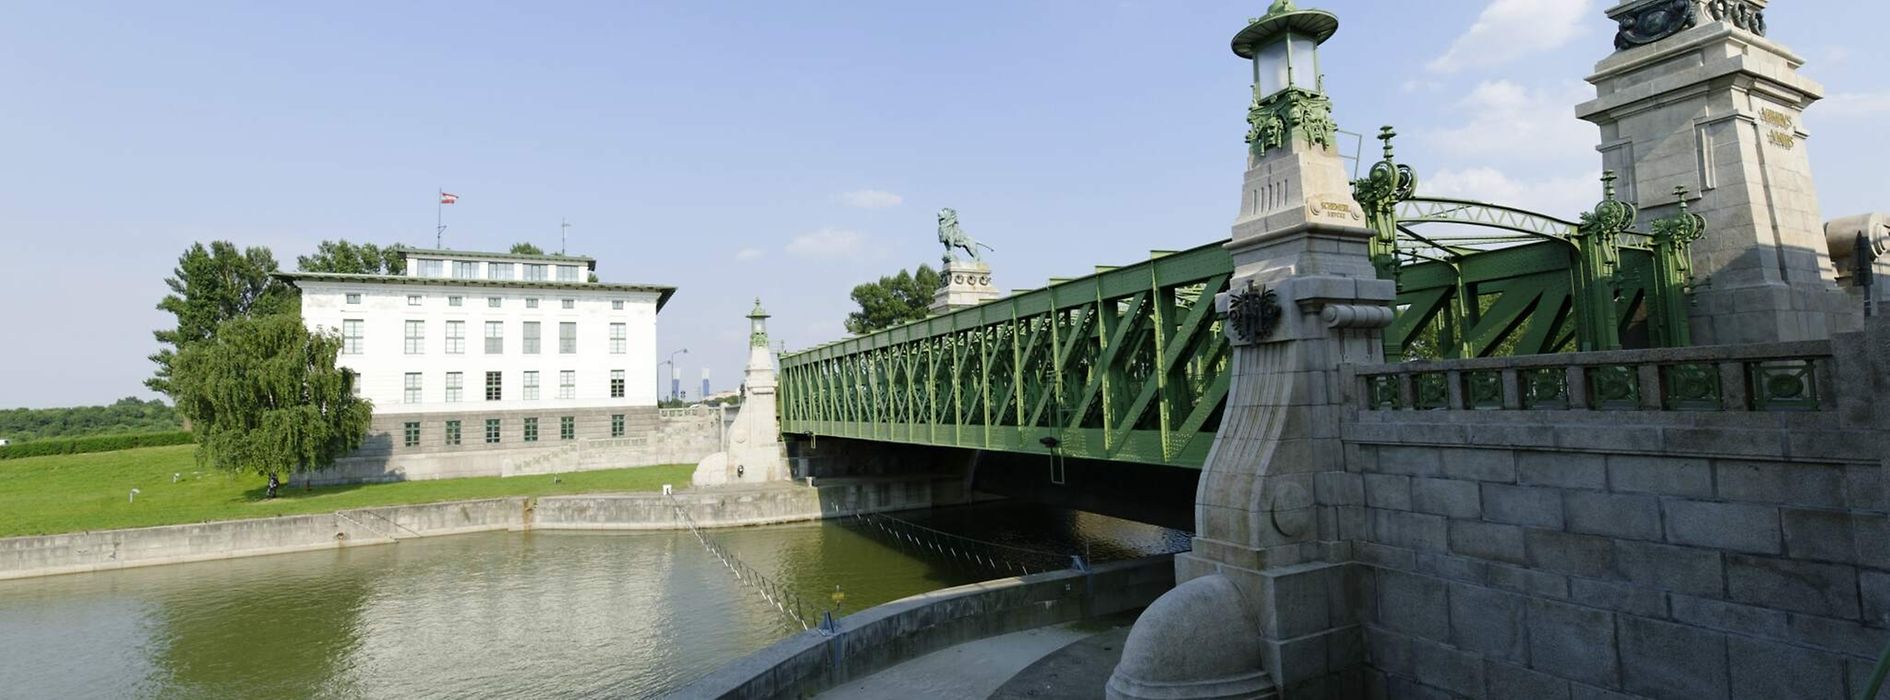 Bridge over the Danube Canal